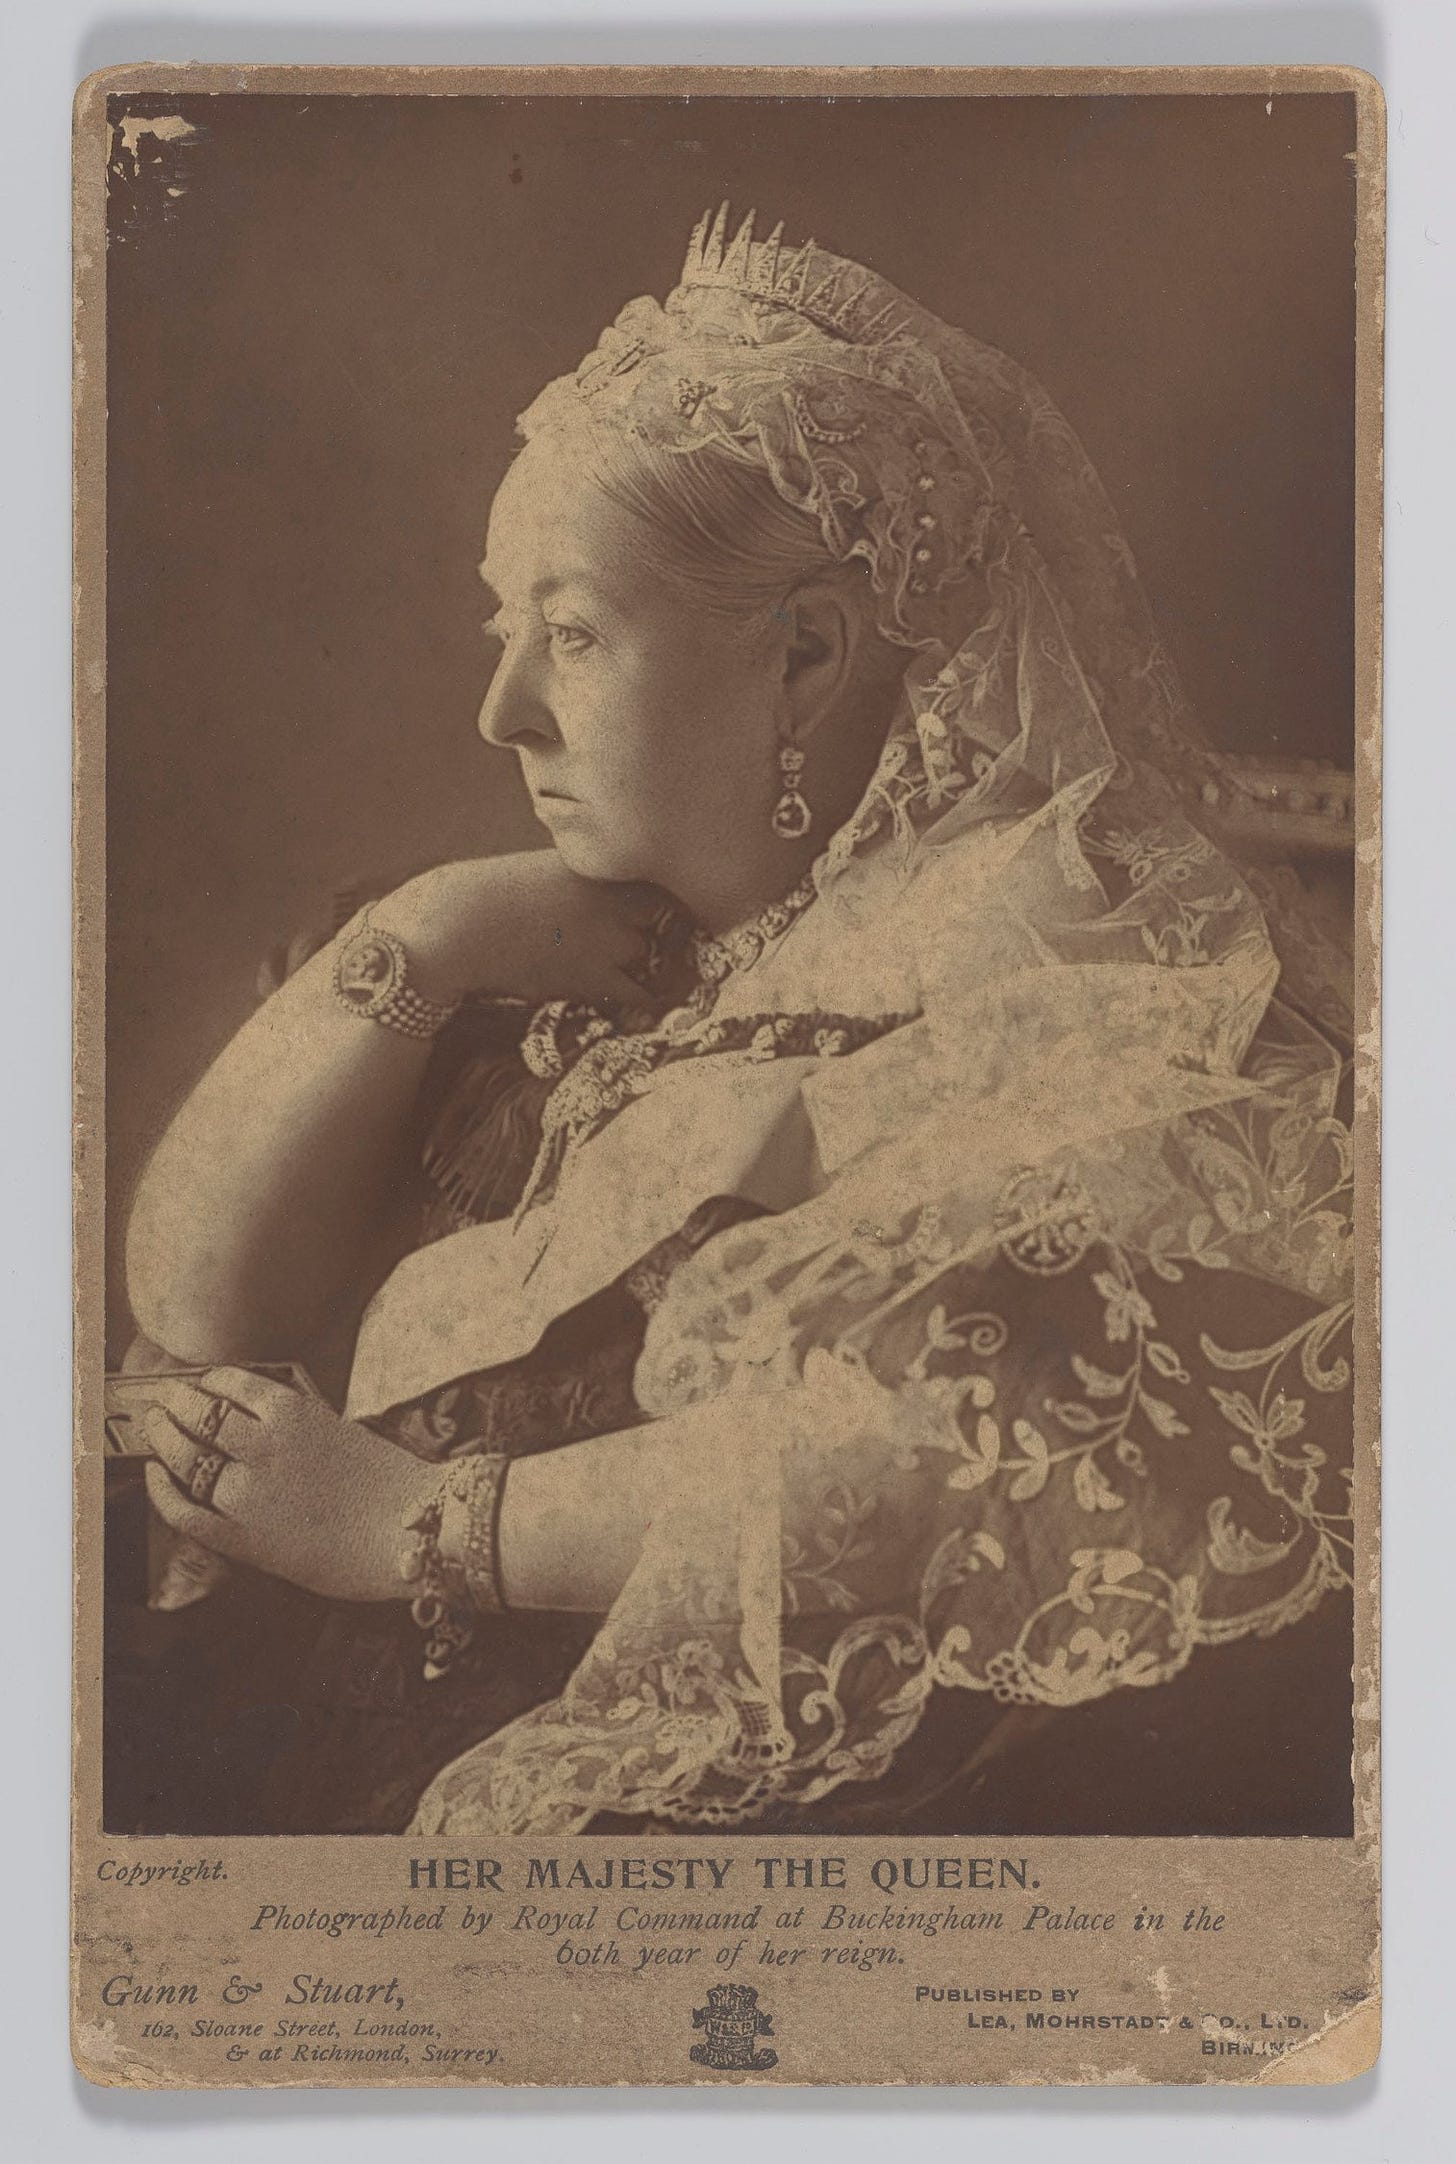 Gunn & Stuart : 162 Sloane Street, London - Portrait of Queen Victoria  (1819-1901) during her Diamond Jubilee, 1897